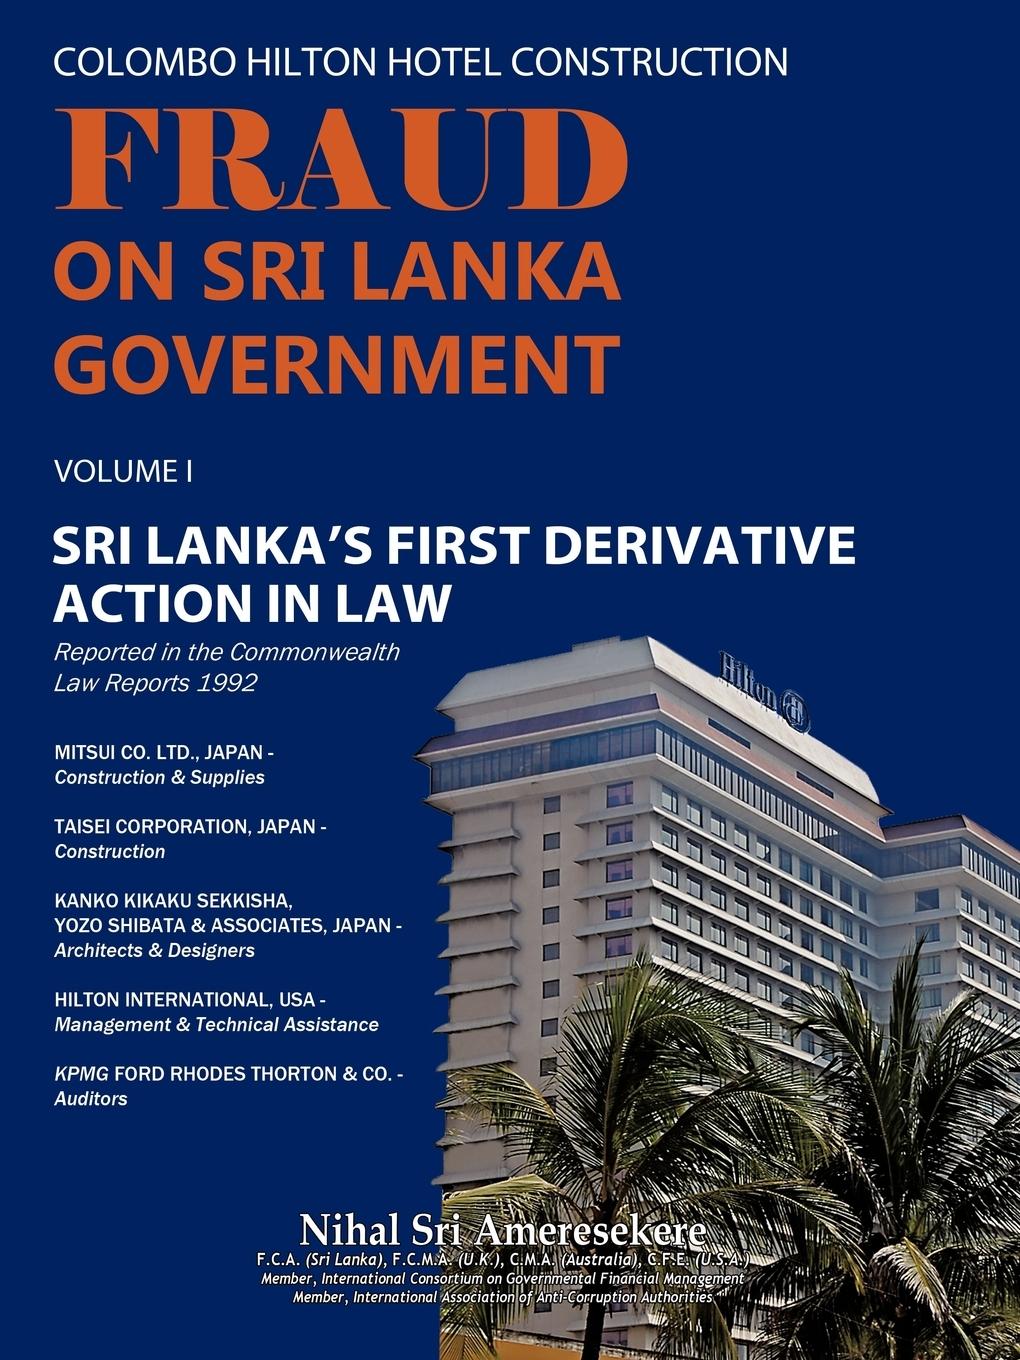 Colombo Hilton Hotel Construction Fraud on Sri Lanka Government - Ameresekere, Nihal Sri